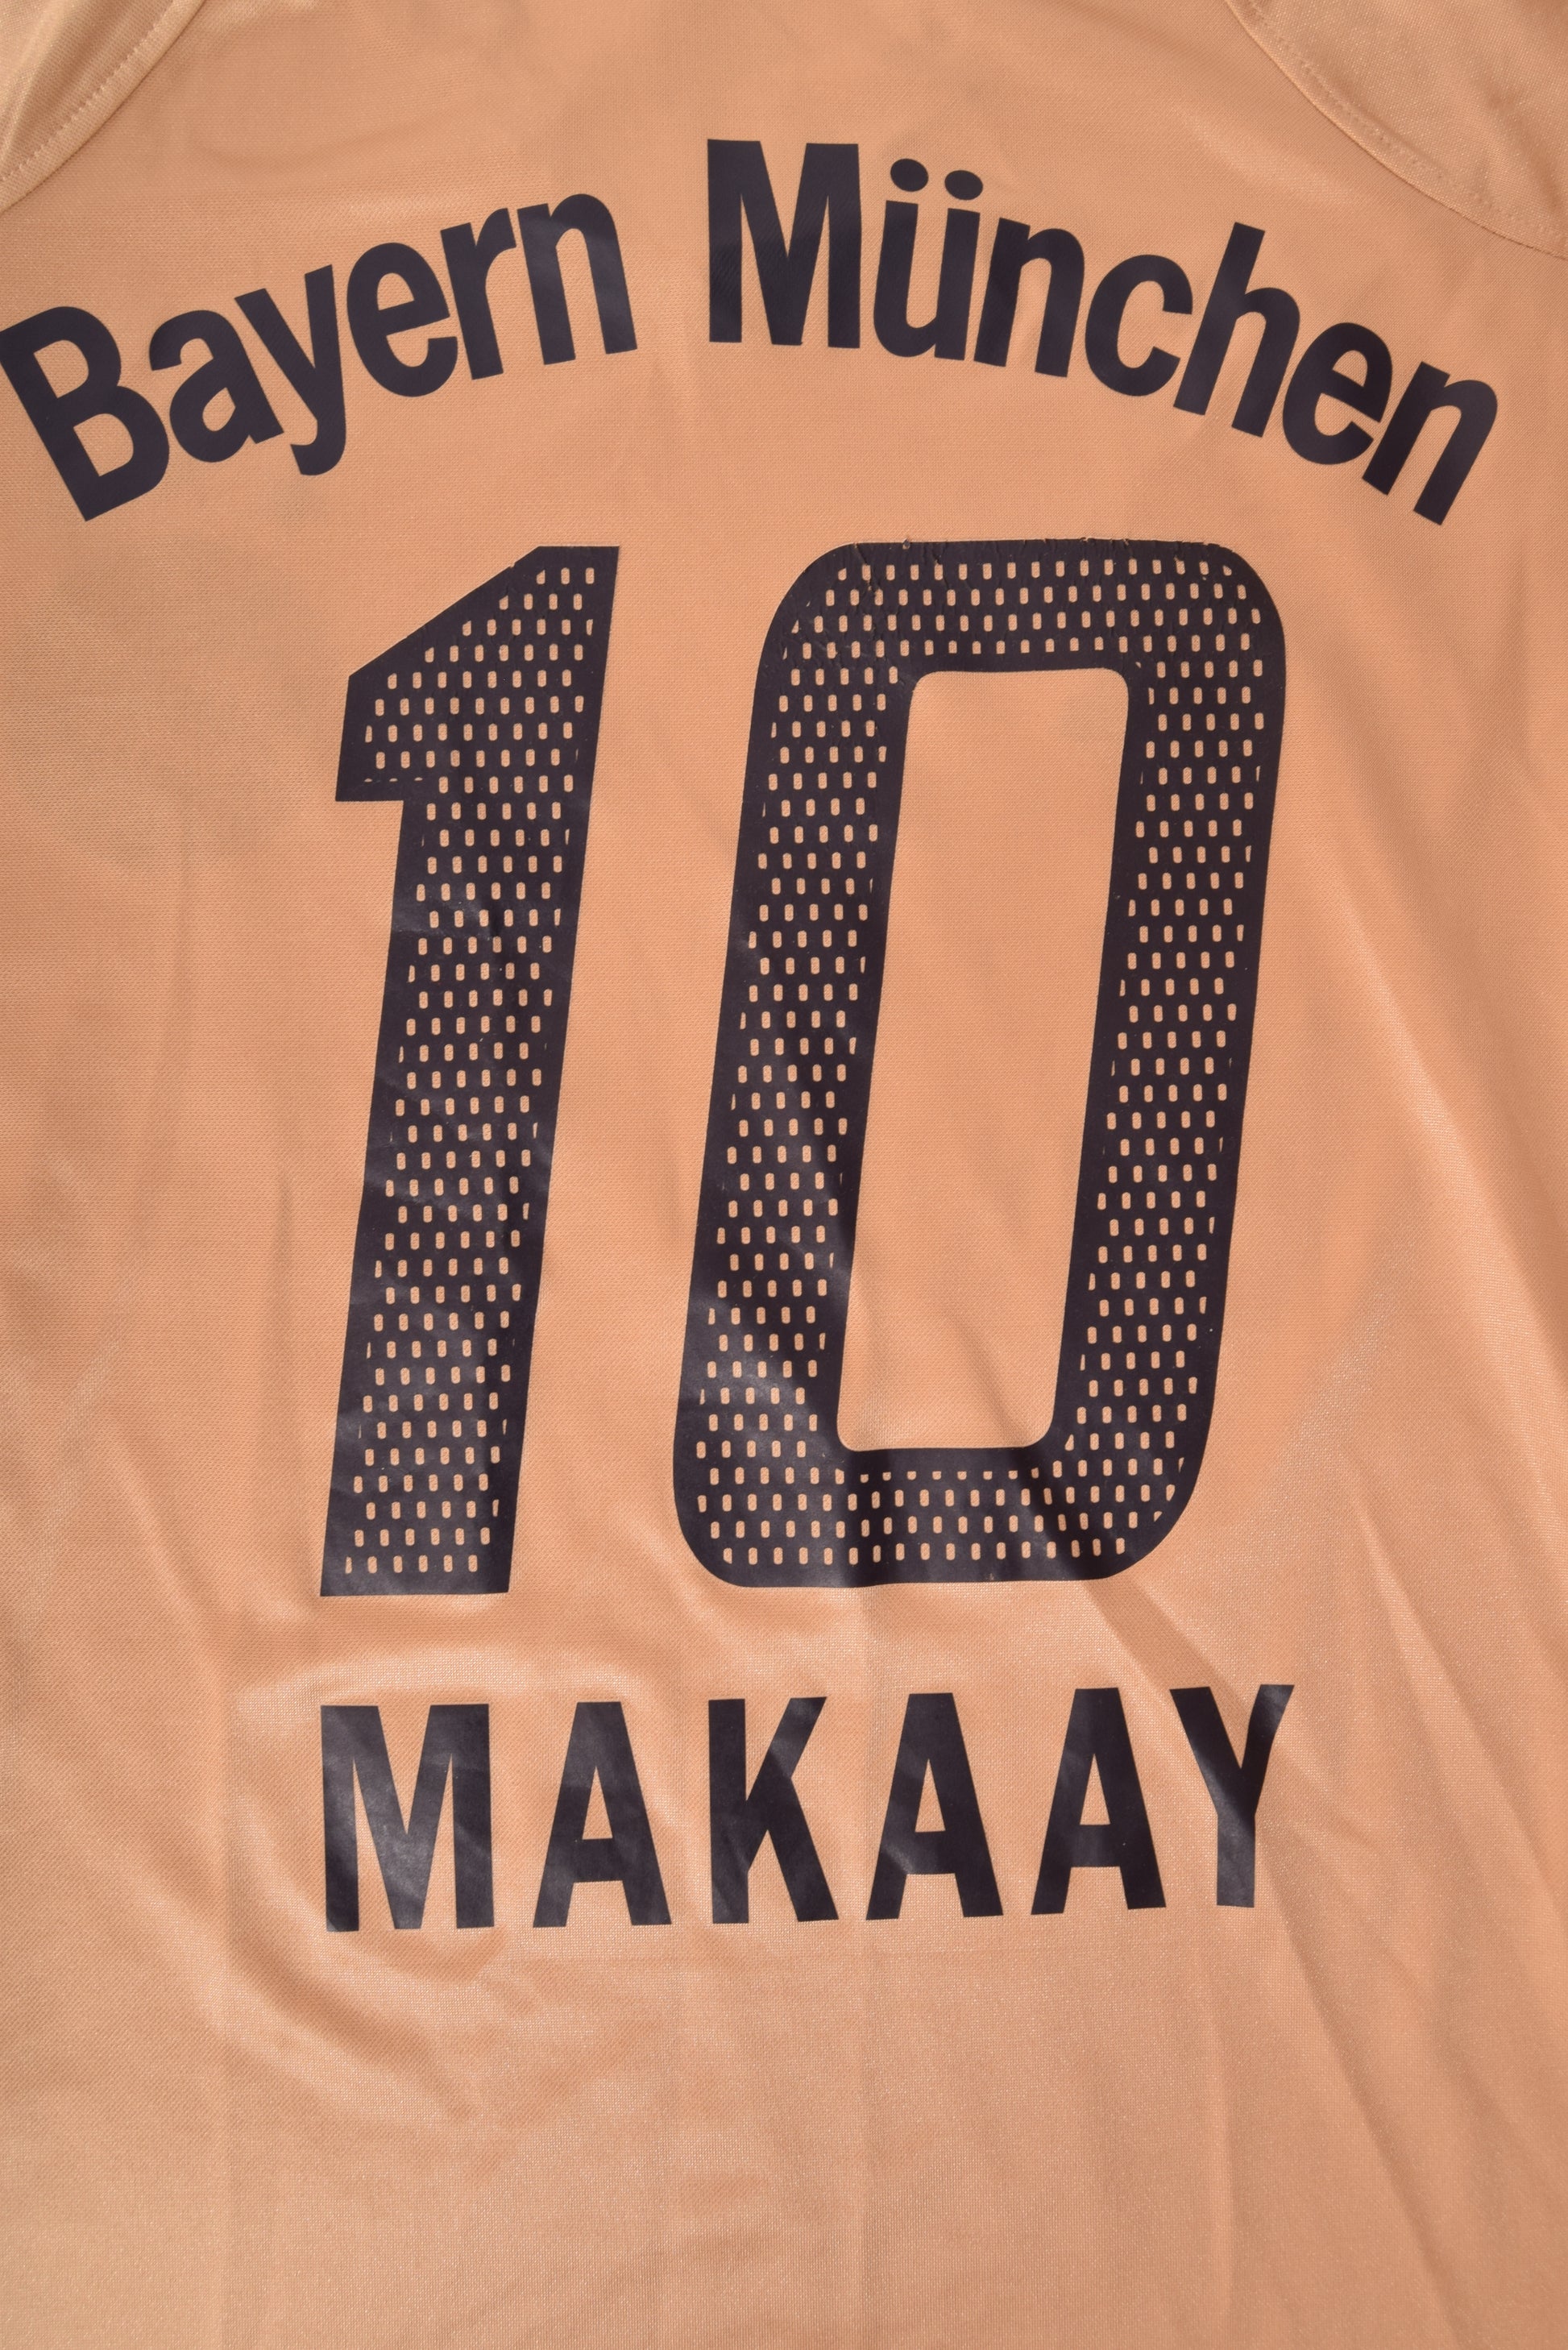 Bayern Munchen Adidas Roy Makaaay Away Football Shirt 2004-2005 Size XL T COM #10 Gold ClimaCool